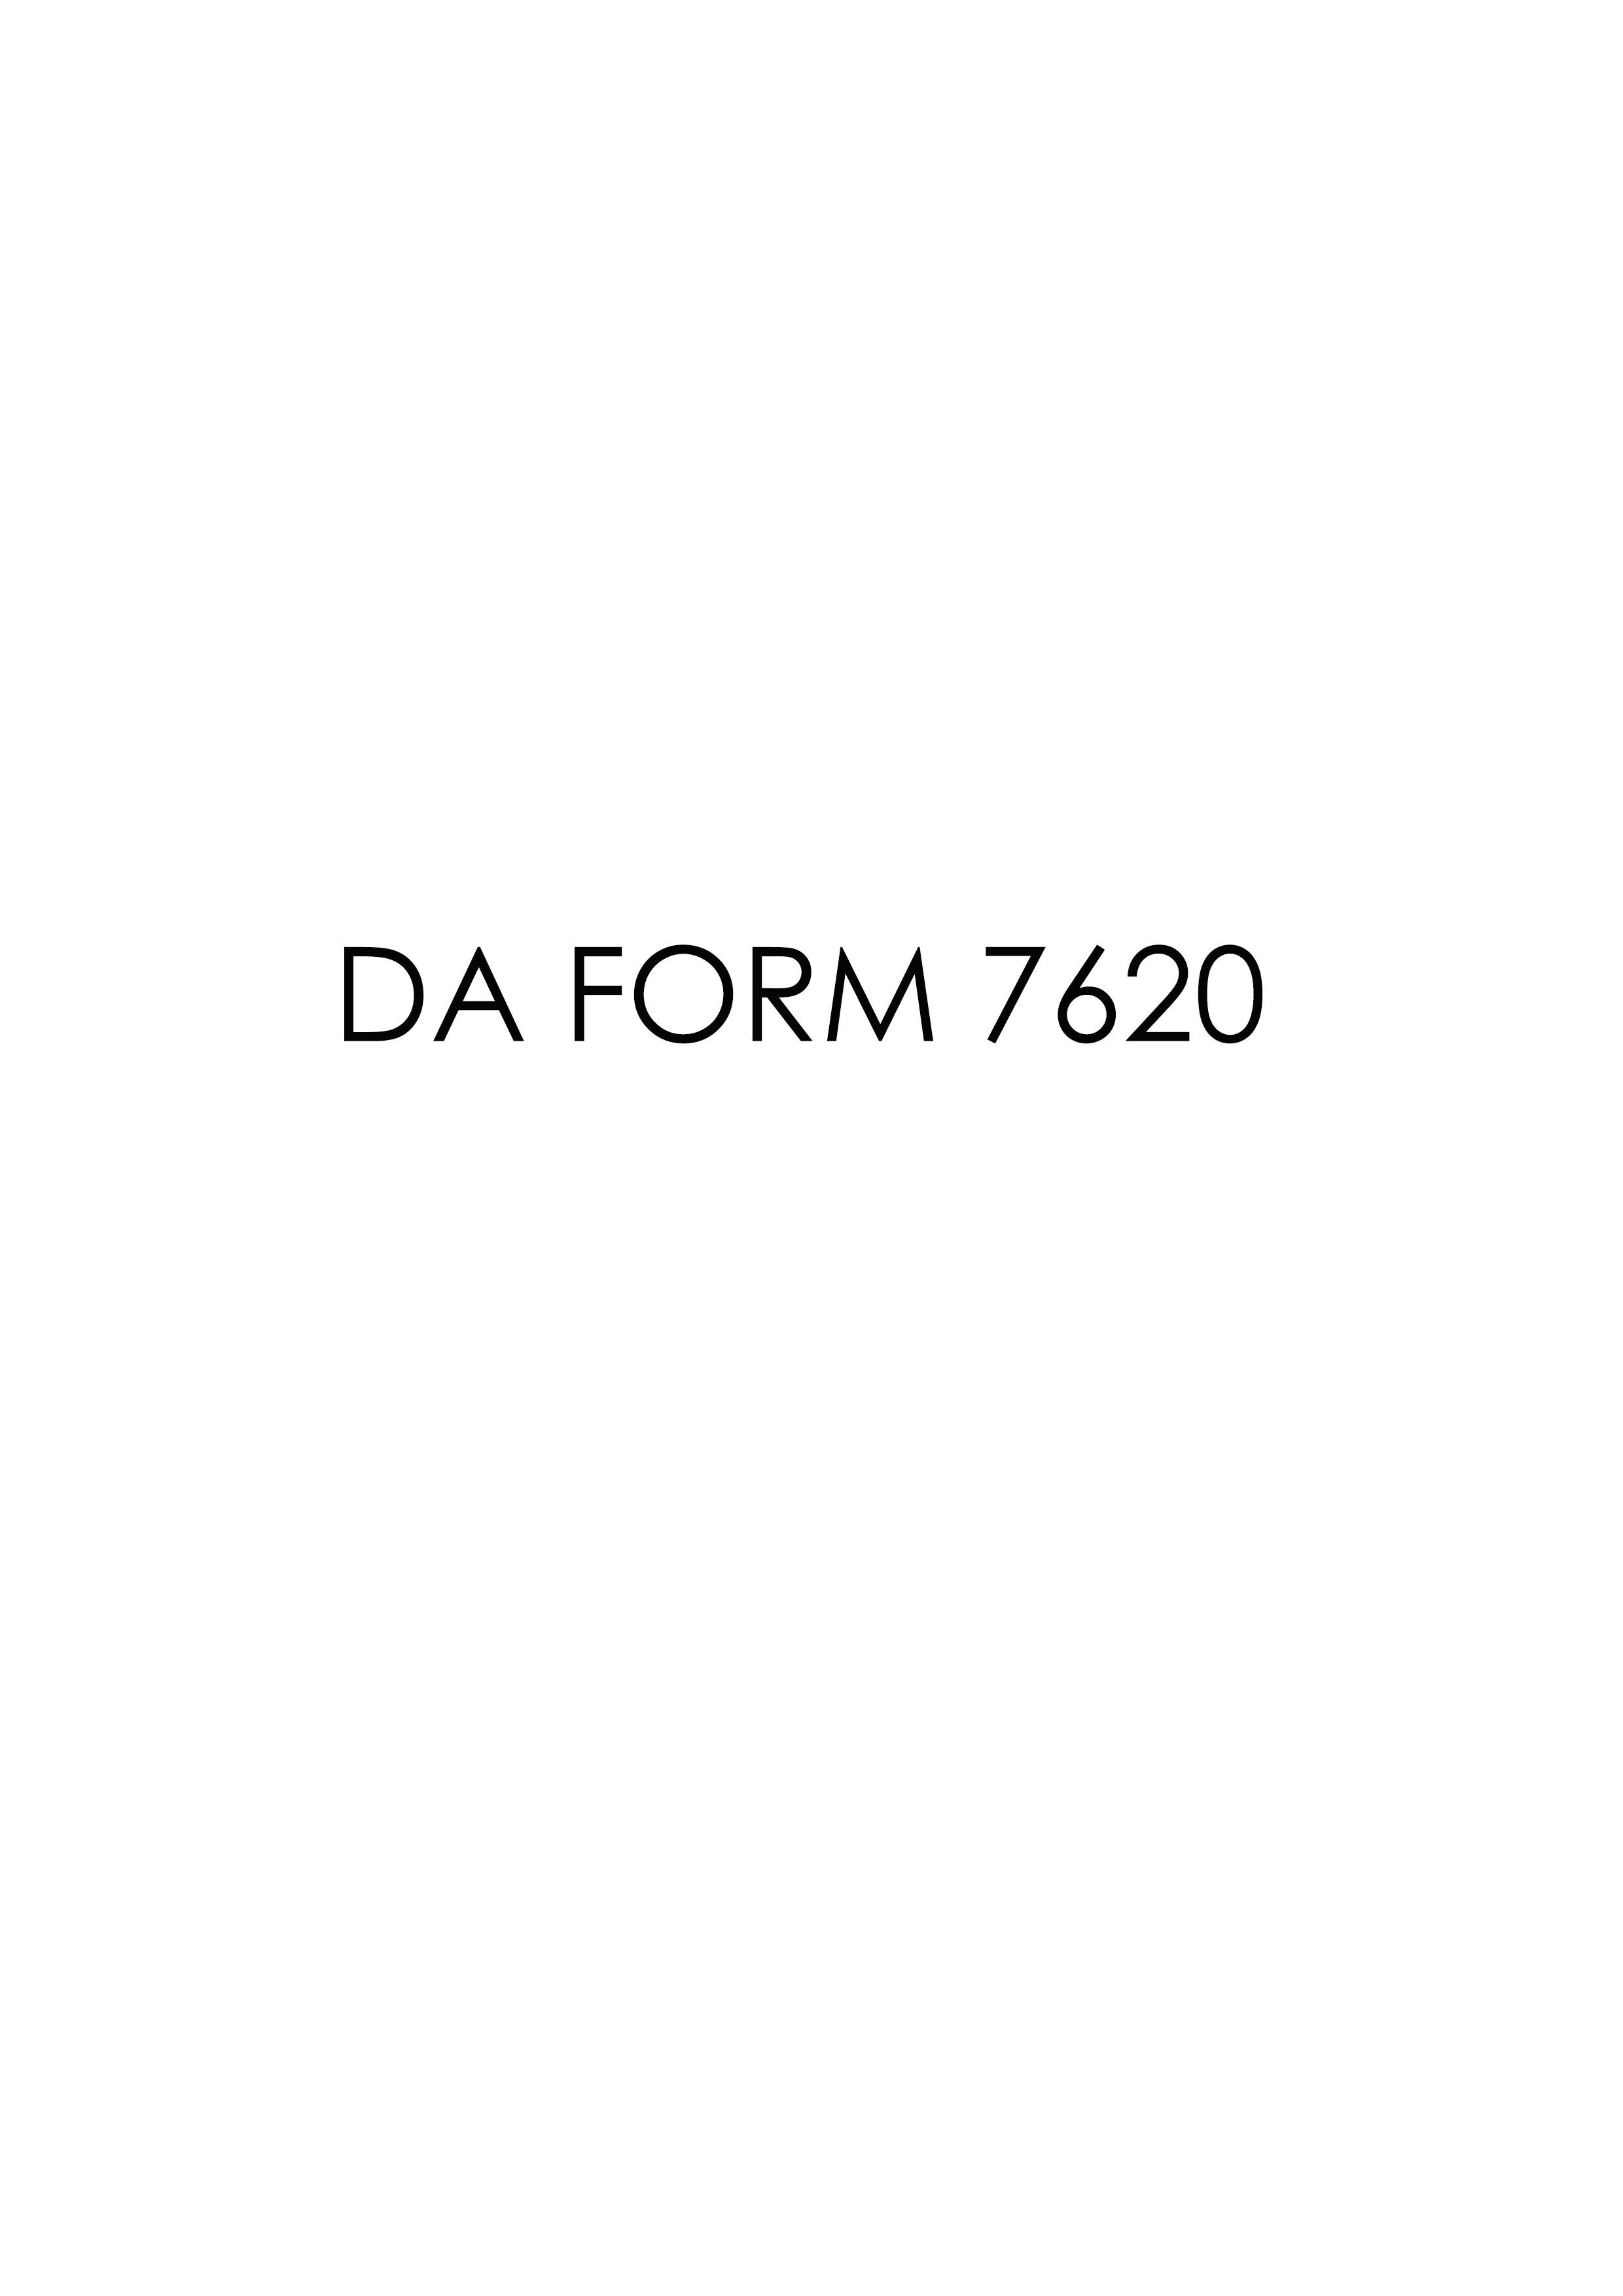 Download da 7620 Form